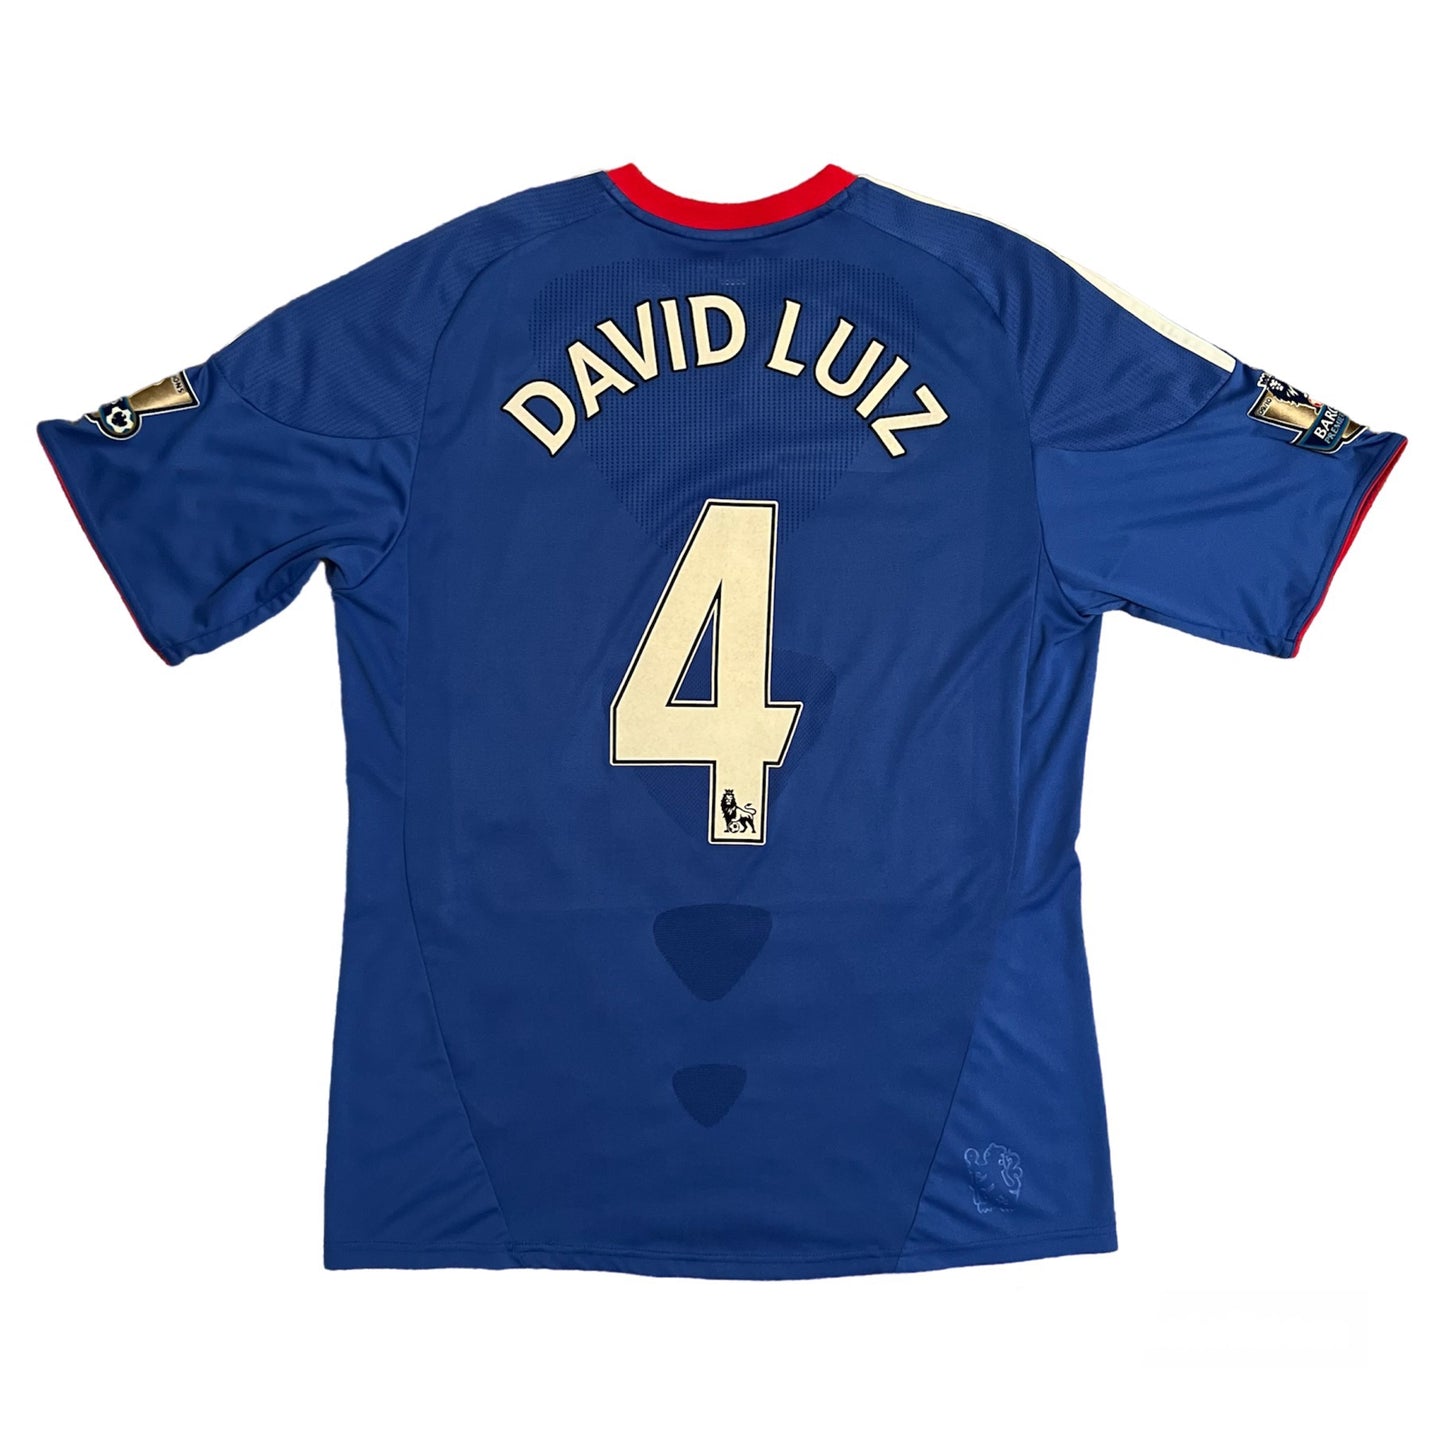 David Luiz Chelsea 2010/11 Home Jersey - L